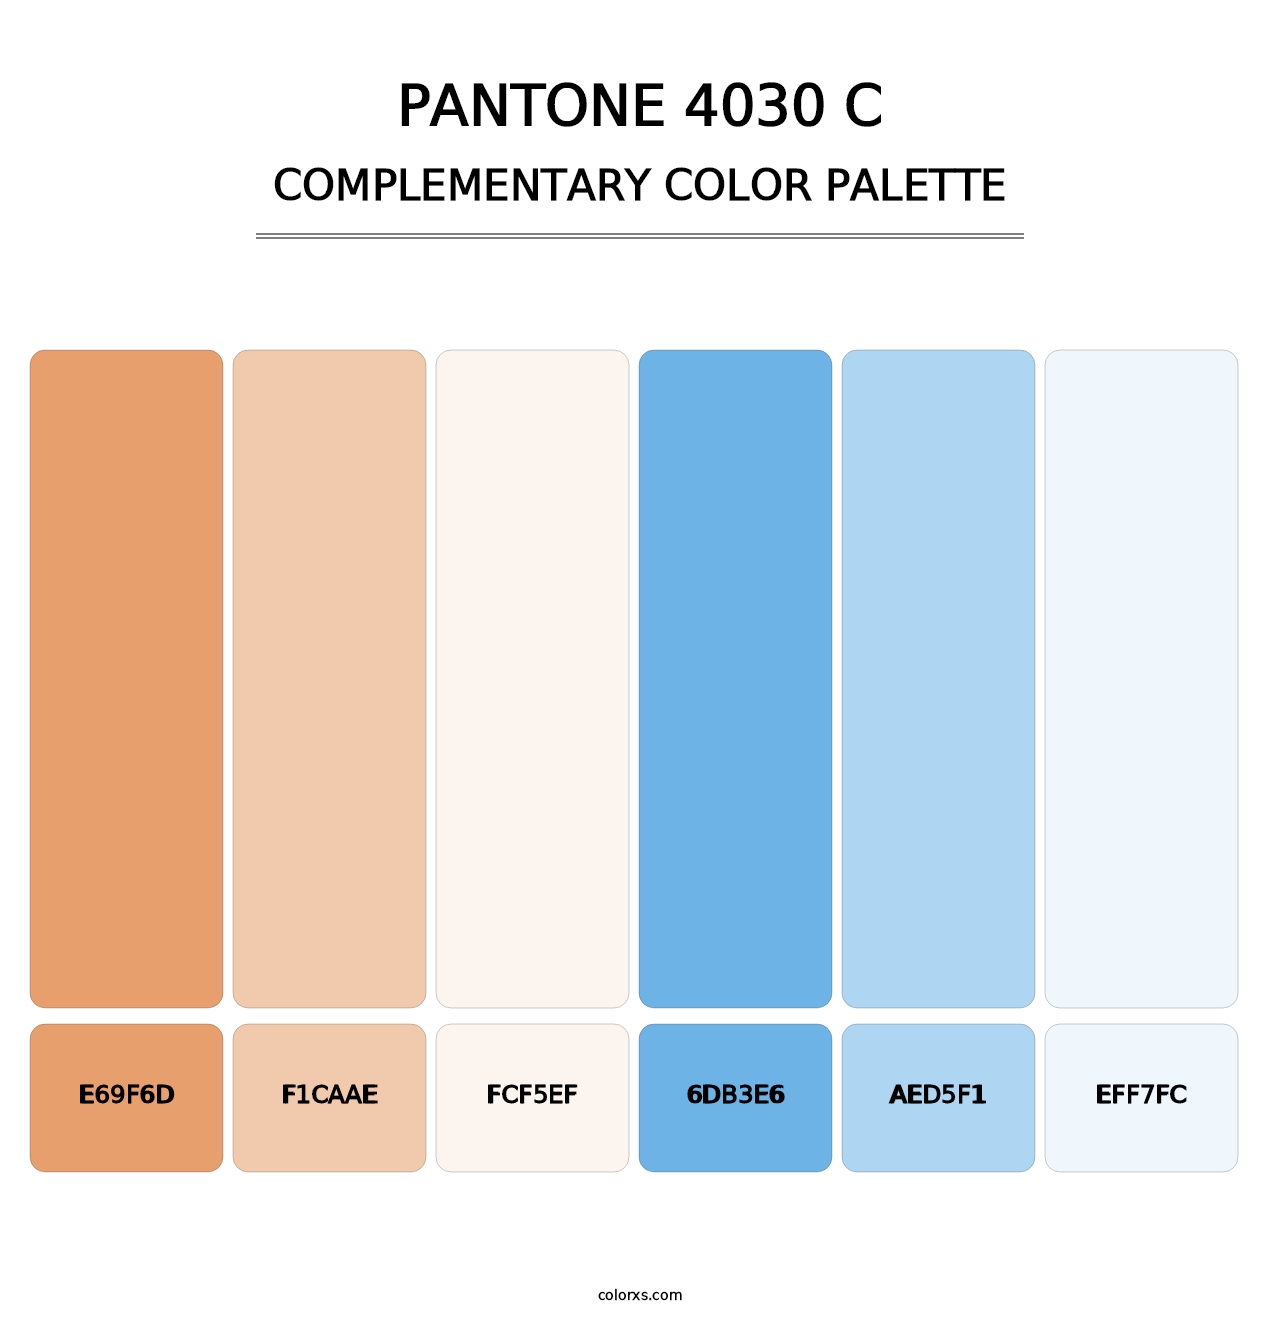 PANTONE 4030 C - Complementary Color Palette